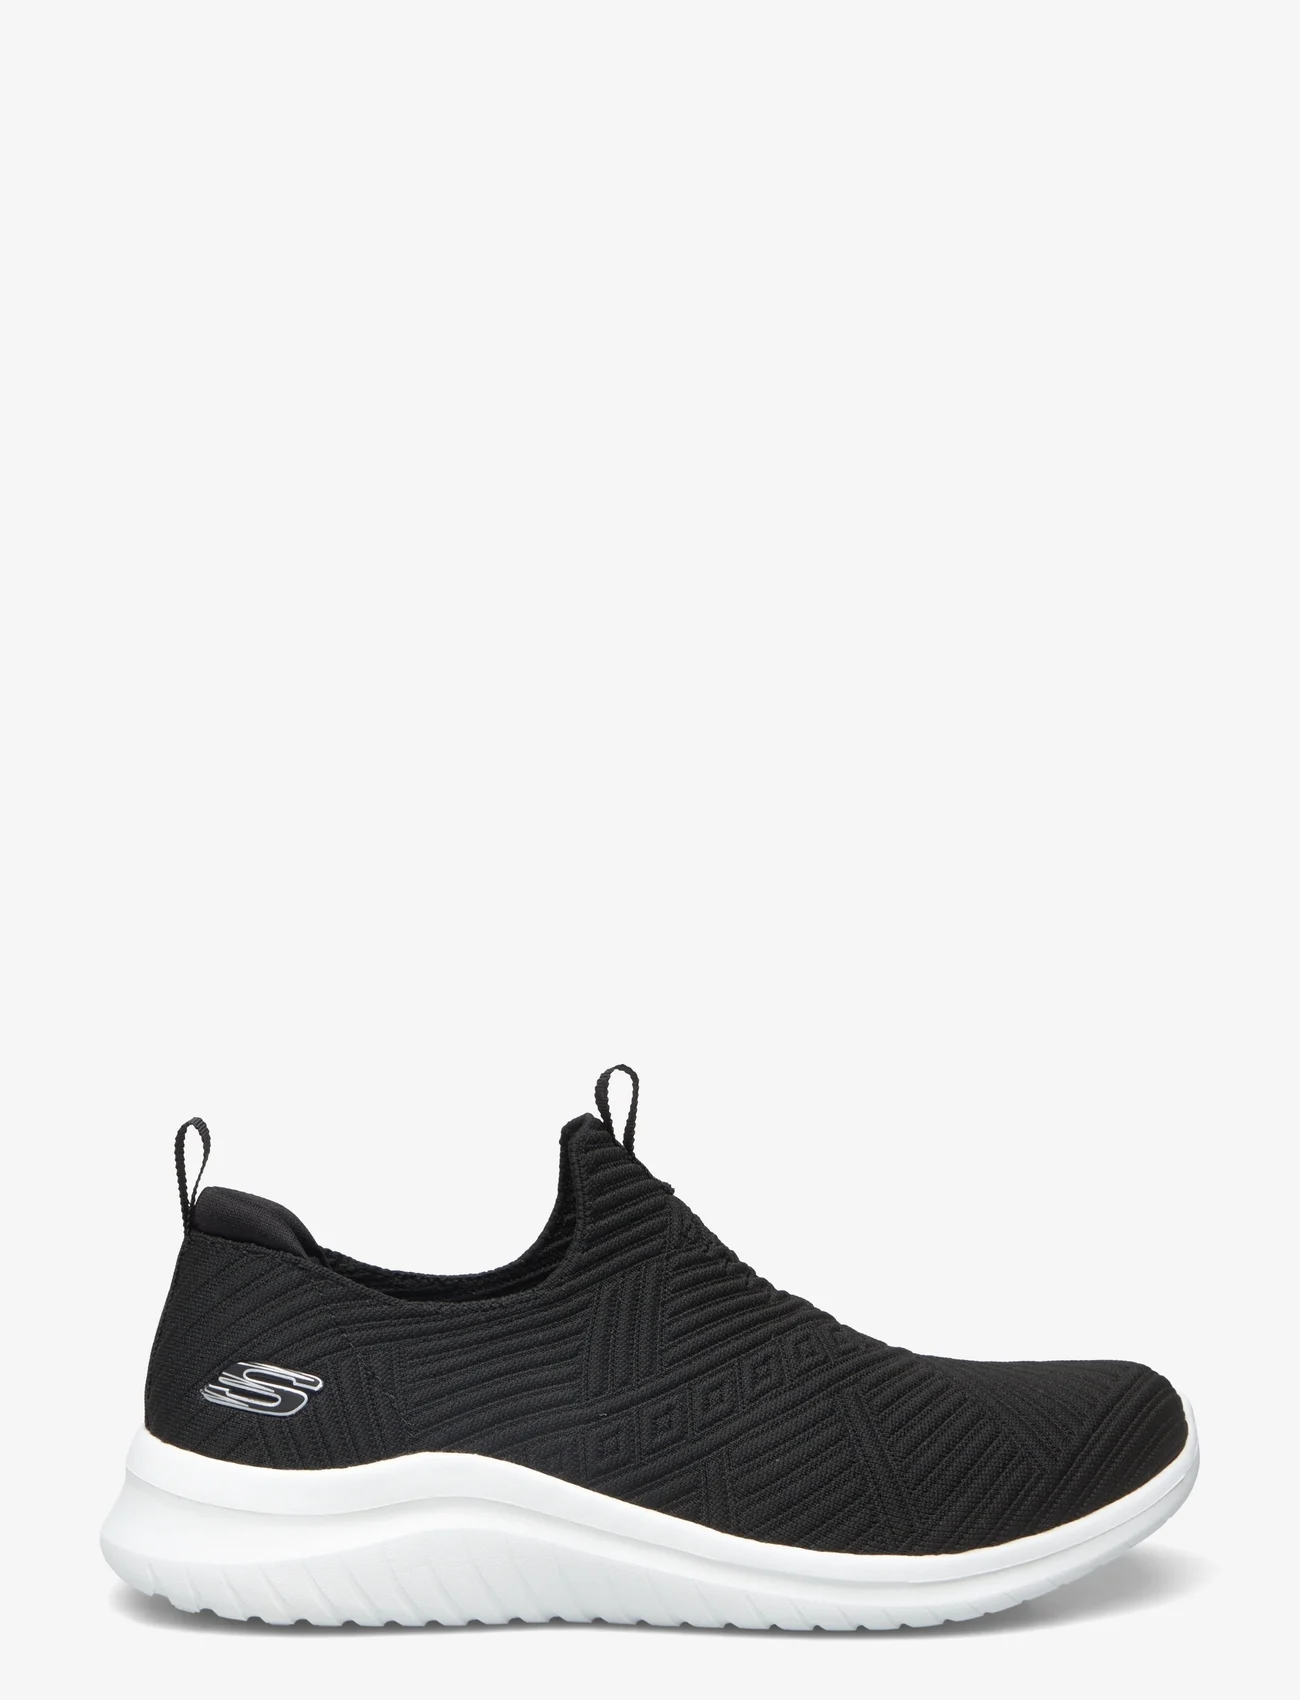 Skechers - Womens Ultra Flex  2.0 - Stunning Surprice - slip-on sneakers - bkw black white - 1